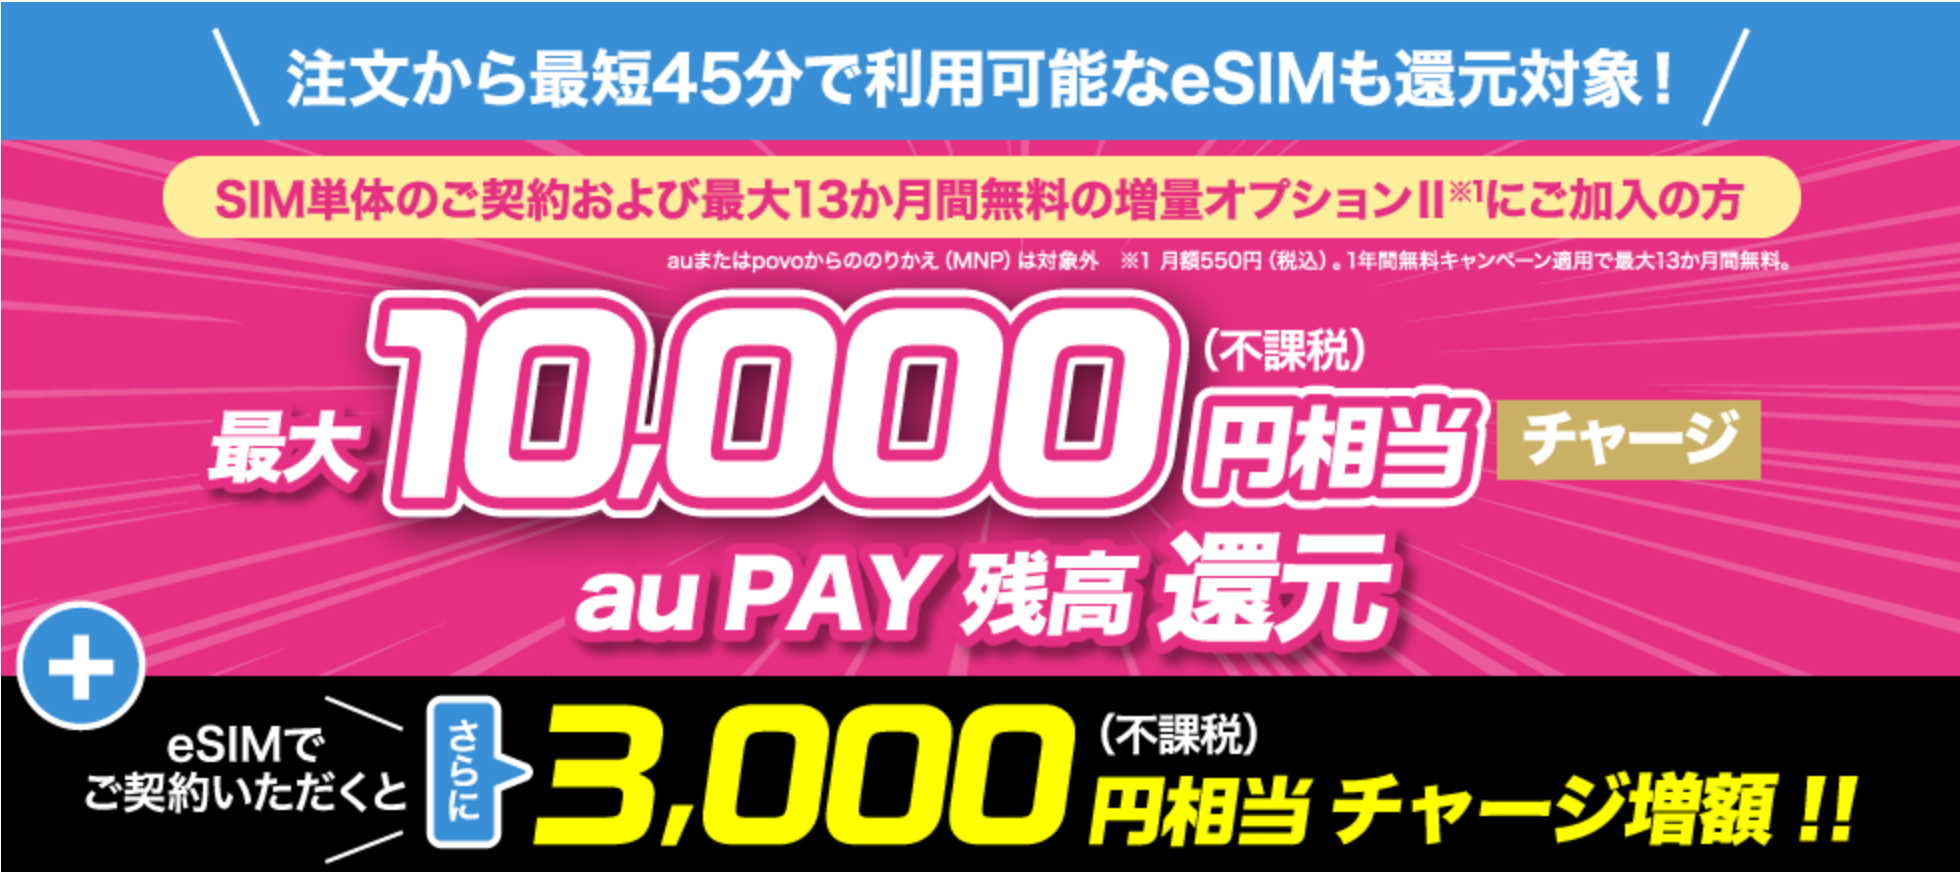 SIMのみ購入で最大13,000円相当のau PAY還元キャンペーン